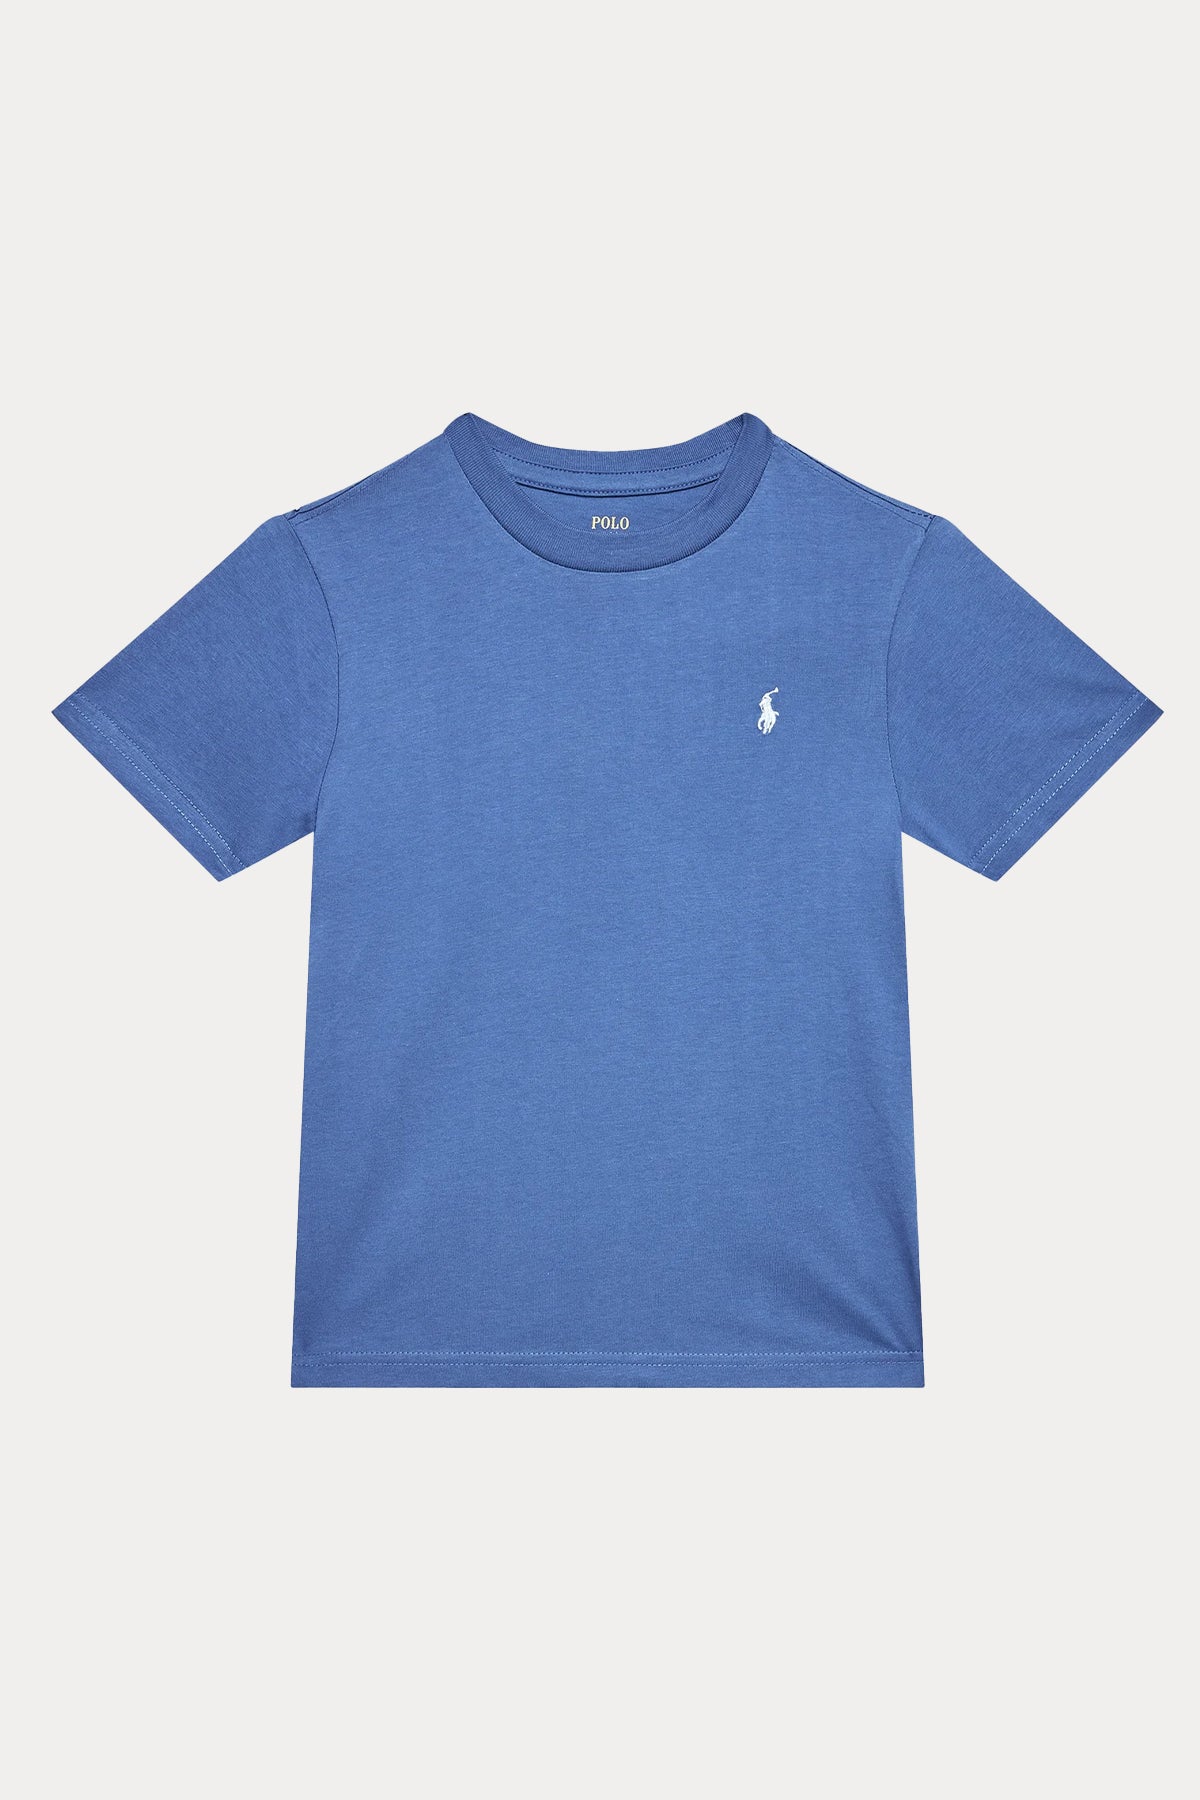 Polo Ralph Lauren Kids S-L Beden Unisex Çocuk Yuvarlak Yaka T-shirt